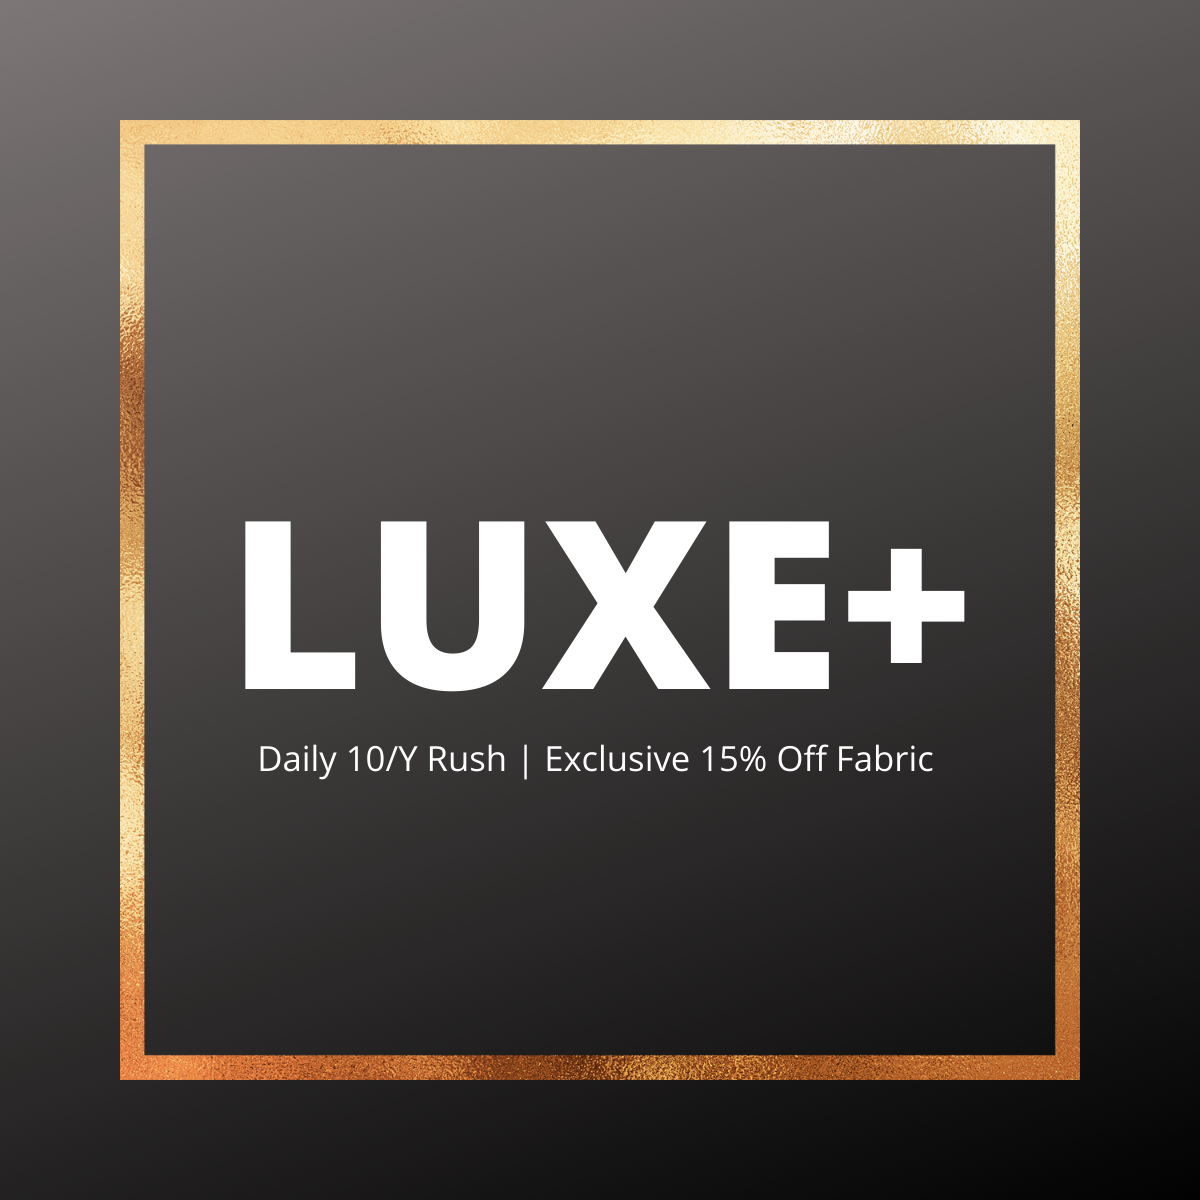 LUXE+ Premium Service